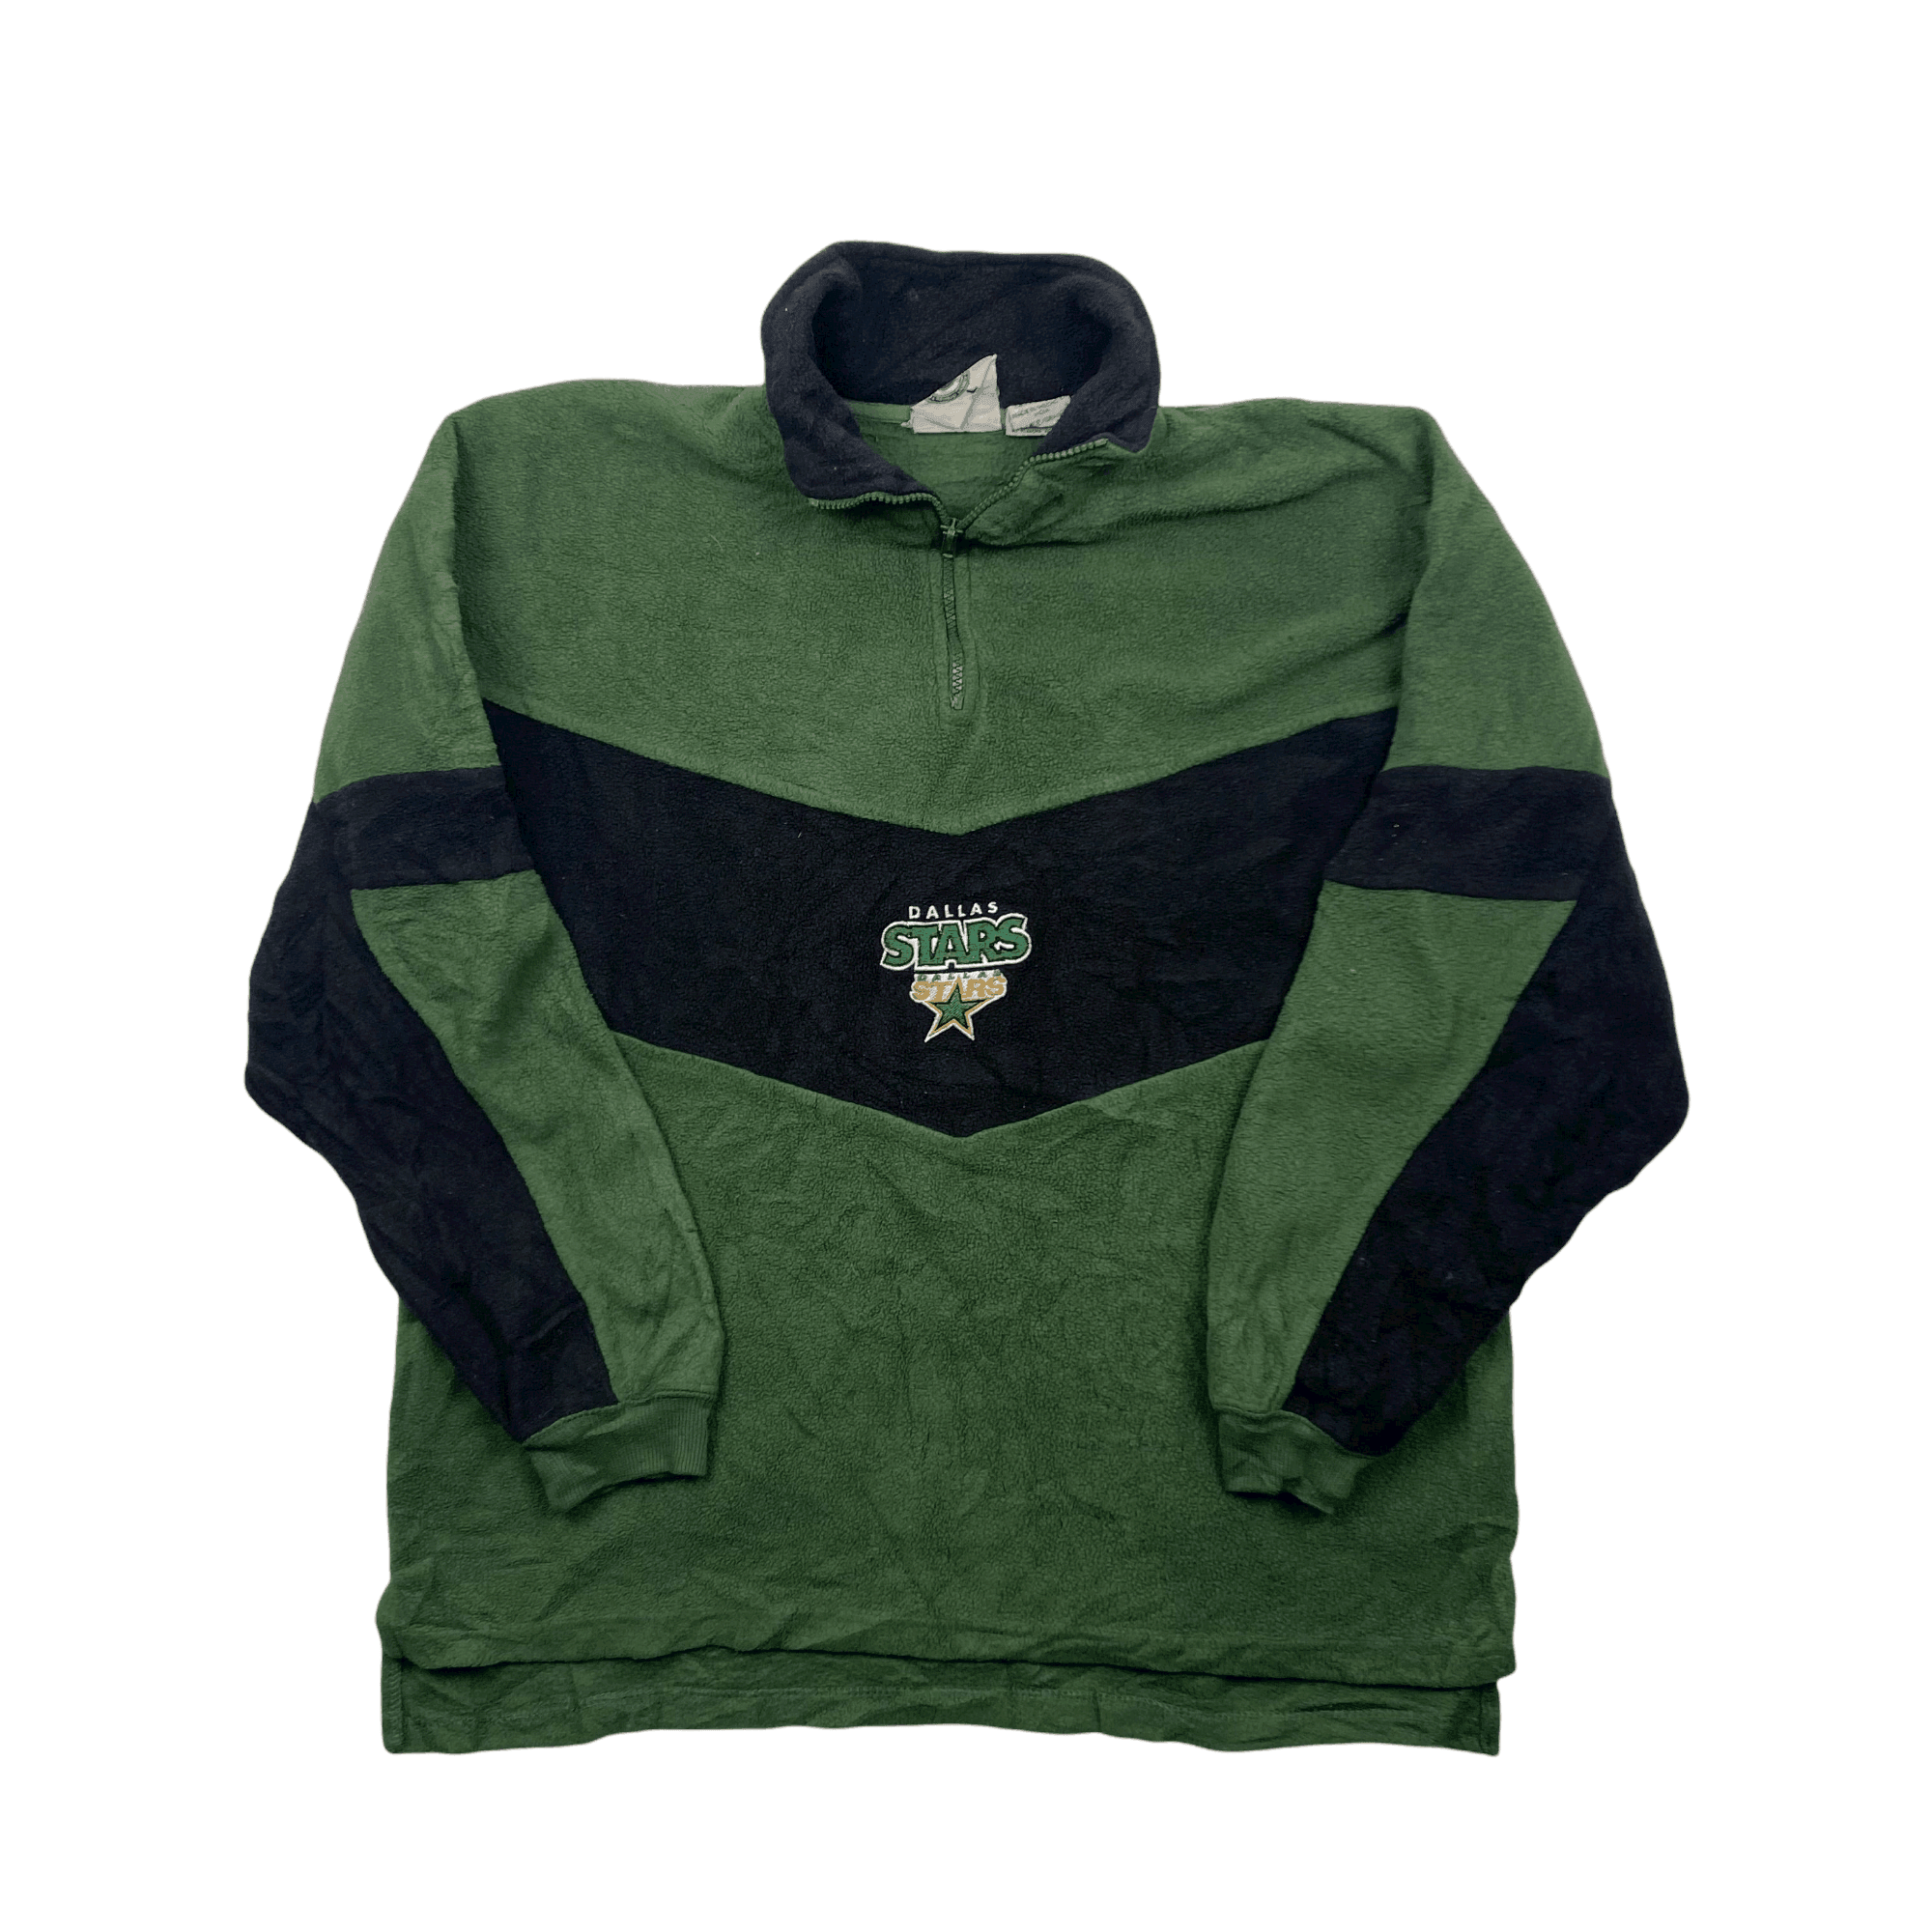 Vintage 90s Green + Black Dallas Stars NHL Spell-Out Quarter Zip Fleece - Large - The Streetwear Studio